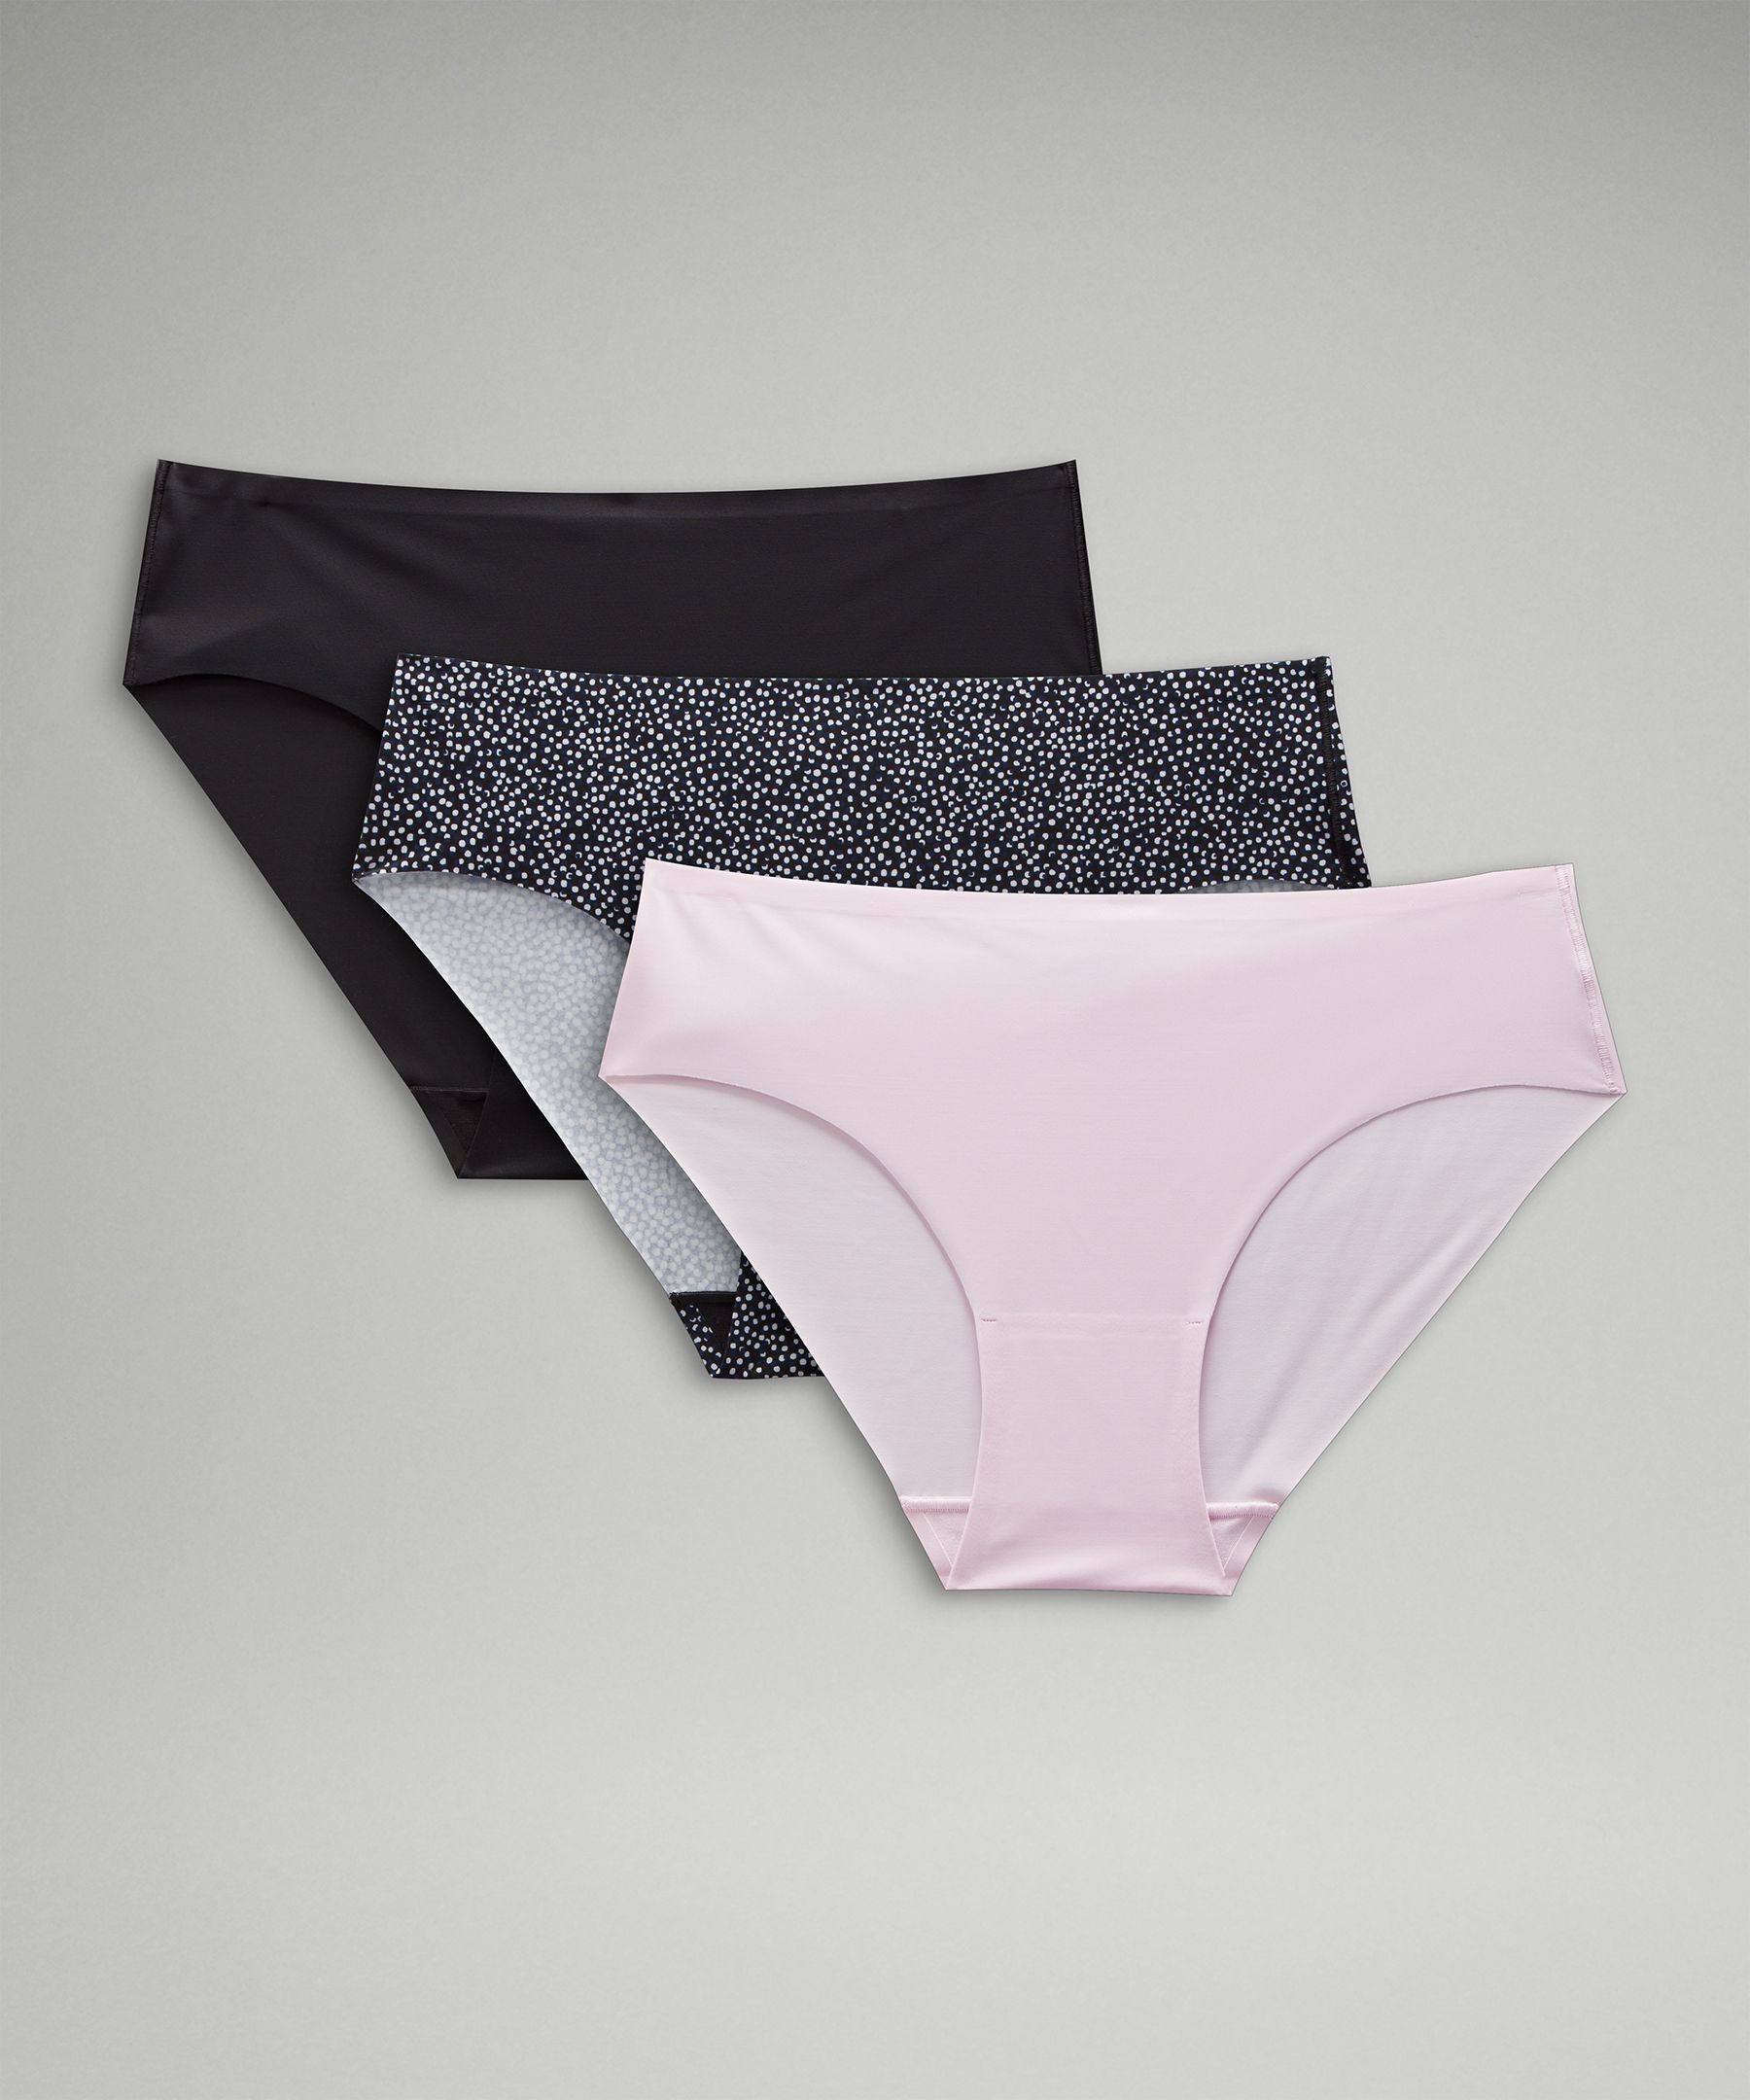 Lululemon athletica InvisiWear Mid-Rise Thong Underwear *7 Pack